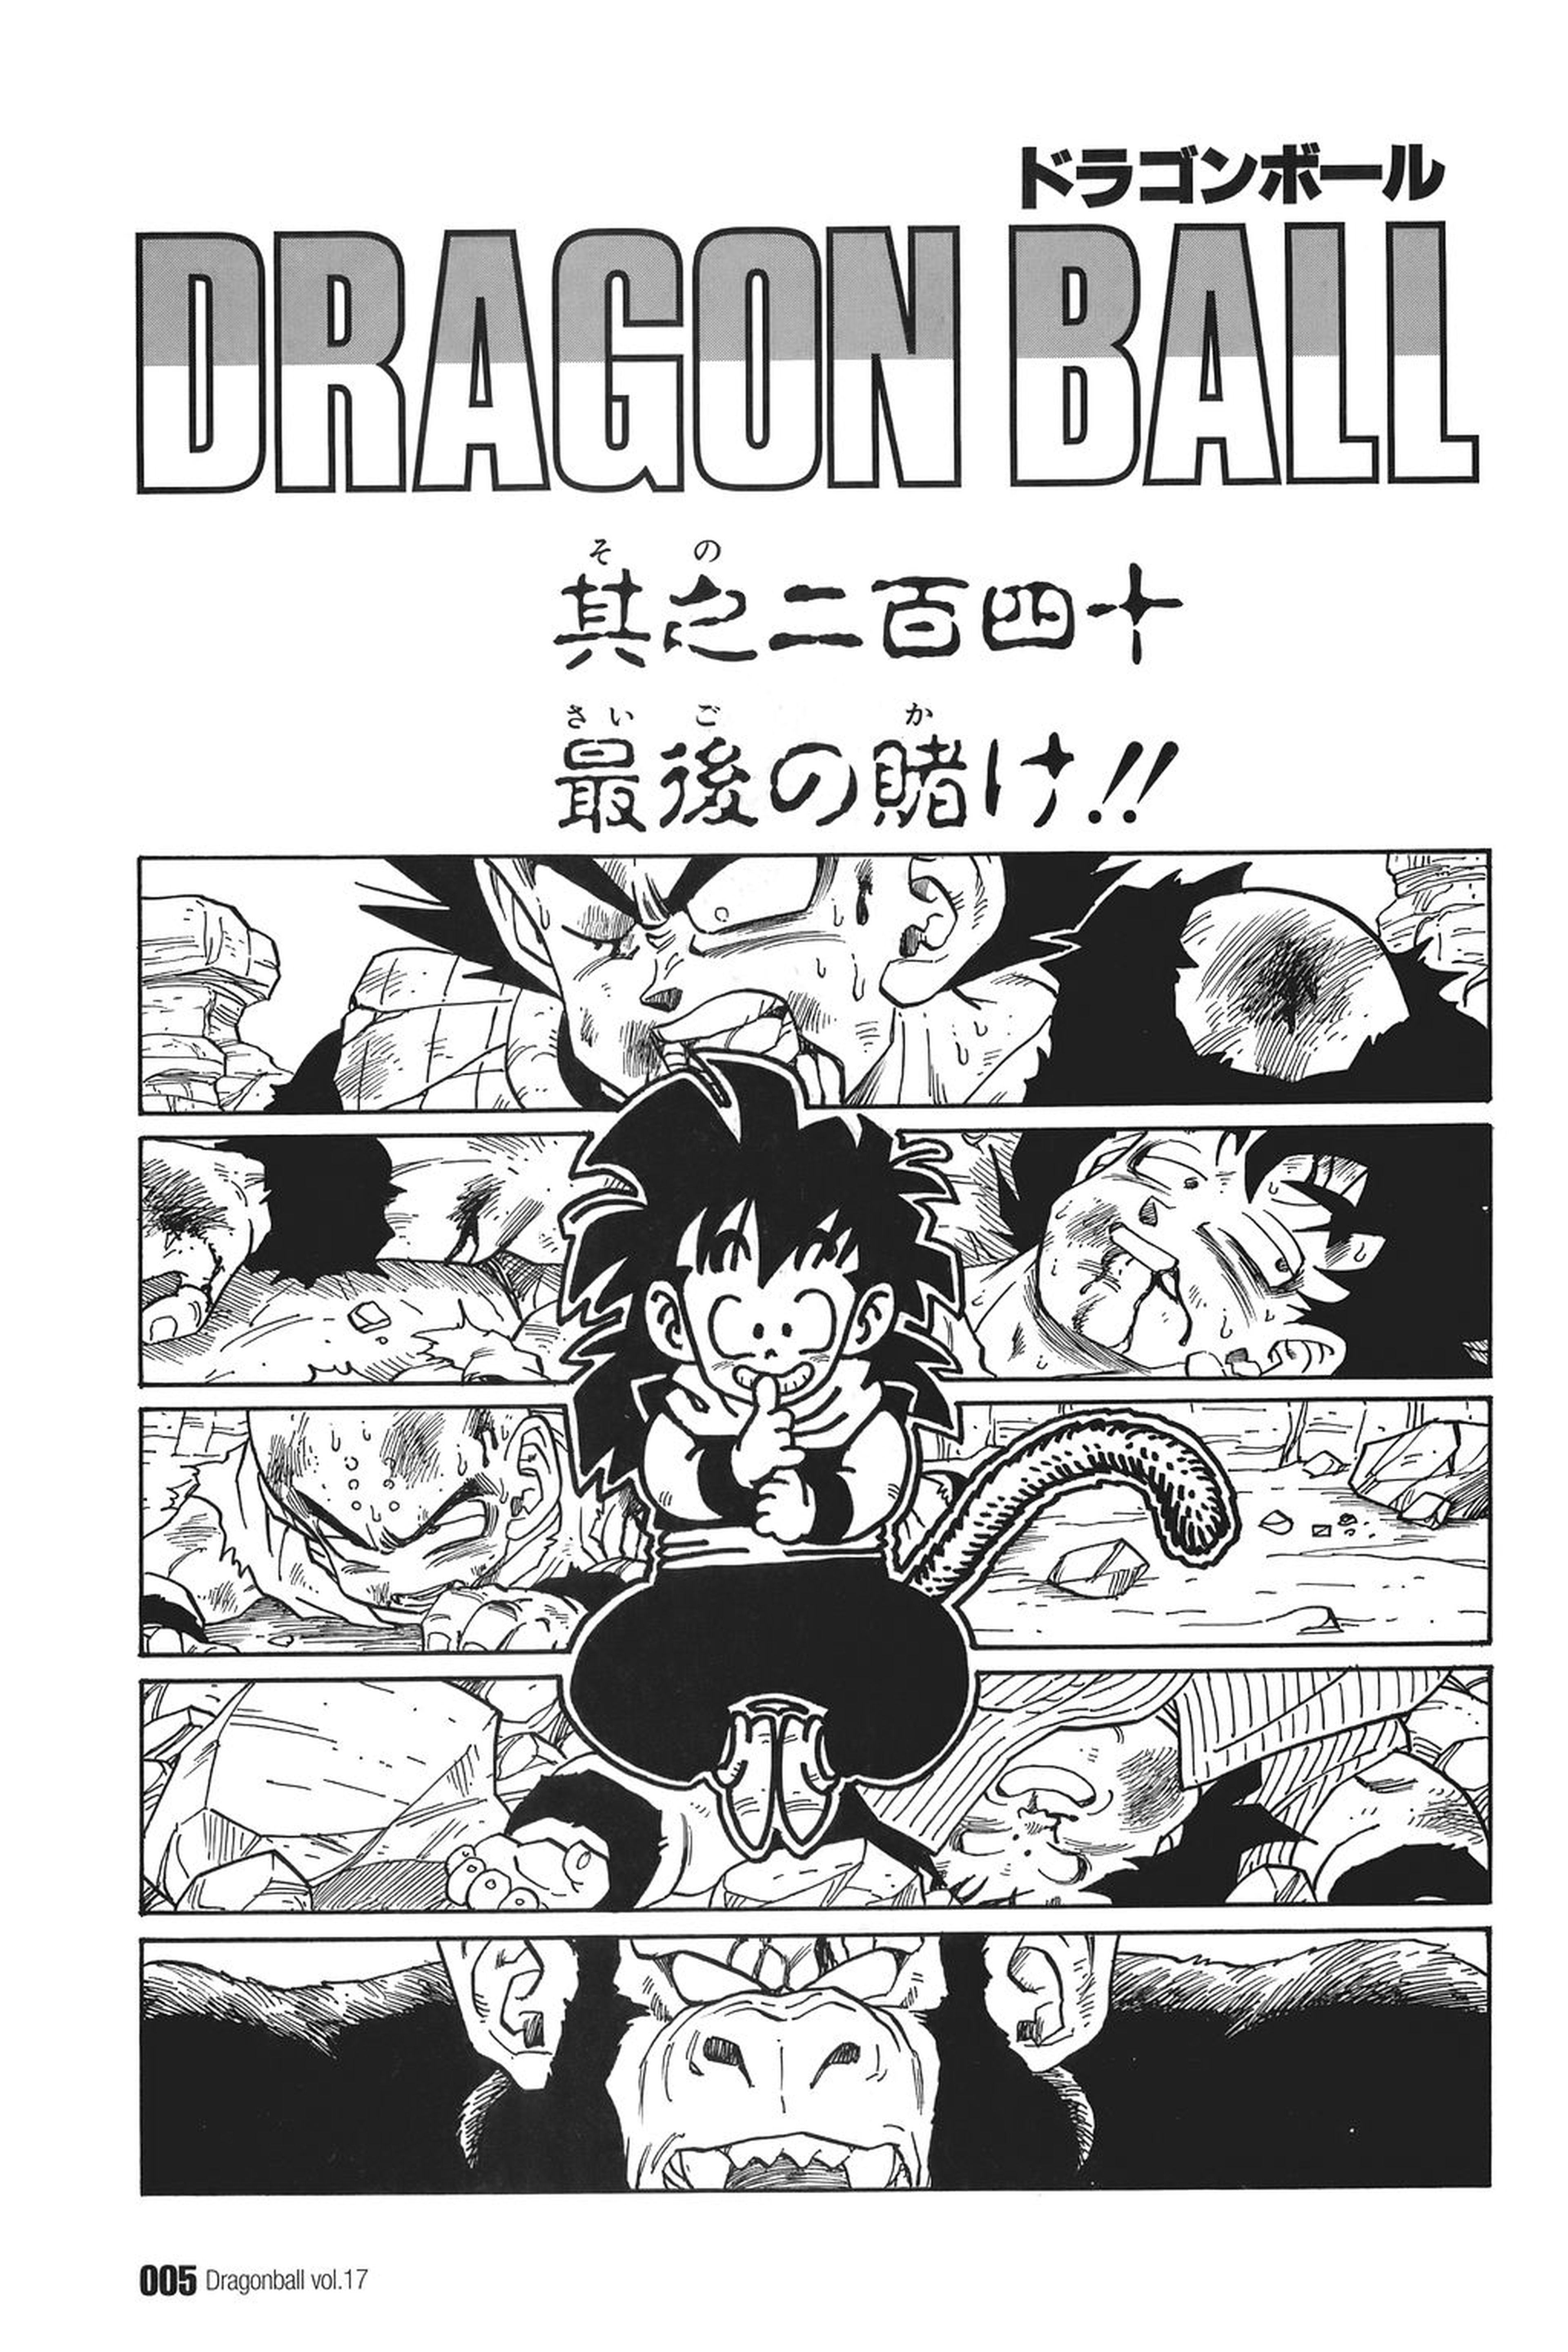 Dragon Ball - Los mejores momentos del manga